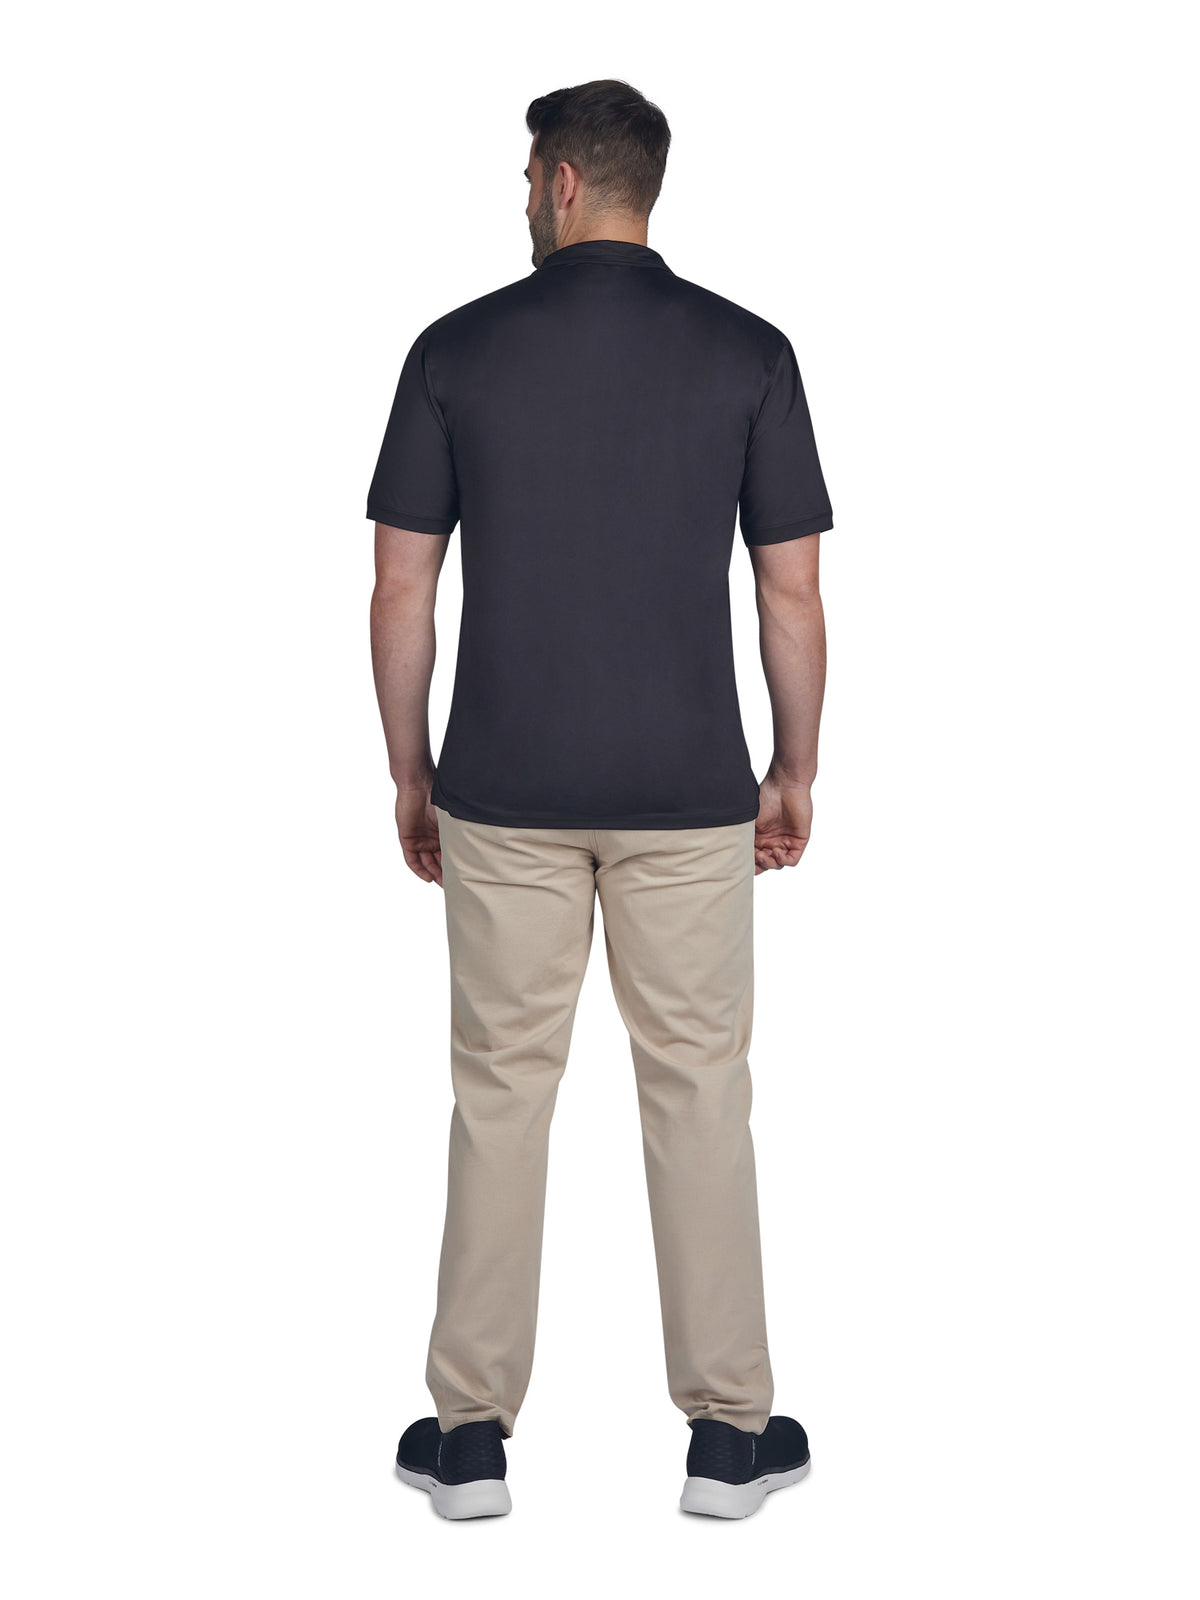 Golf Tech Polo Shirt - Black